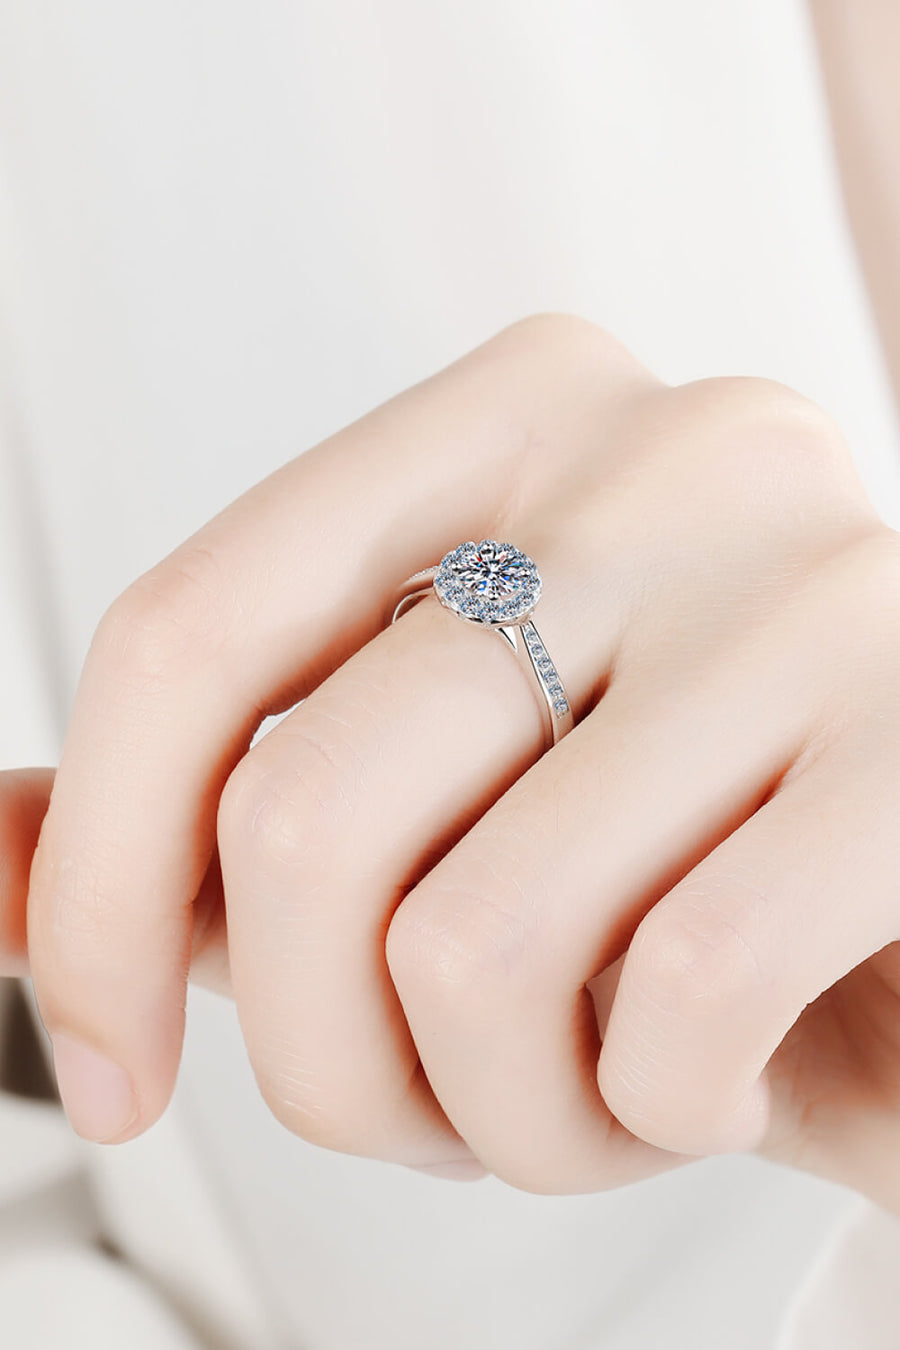 Best Diamond Ring Jewelry Gifts for Women | 1 Carat Round Diamond Ring | MASON New York